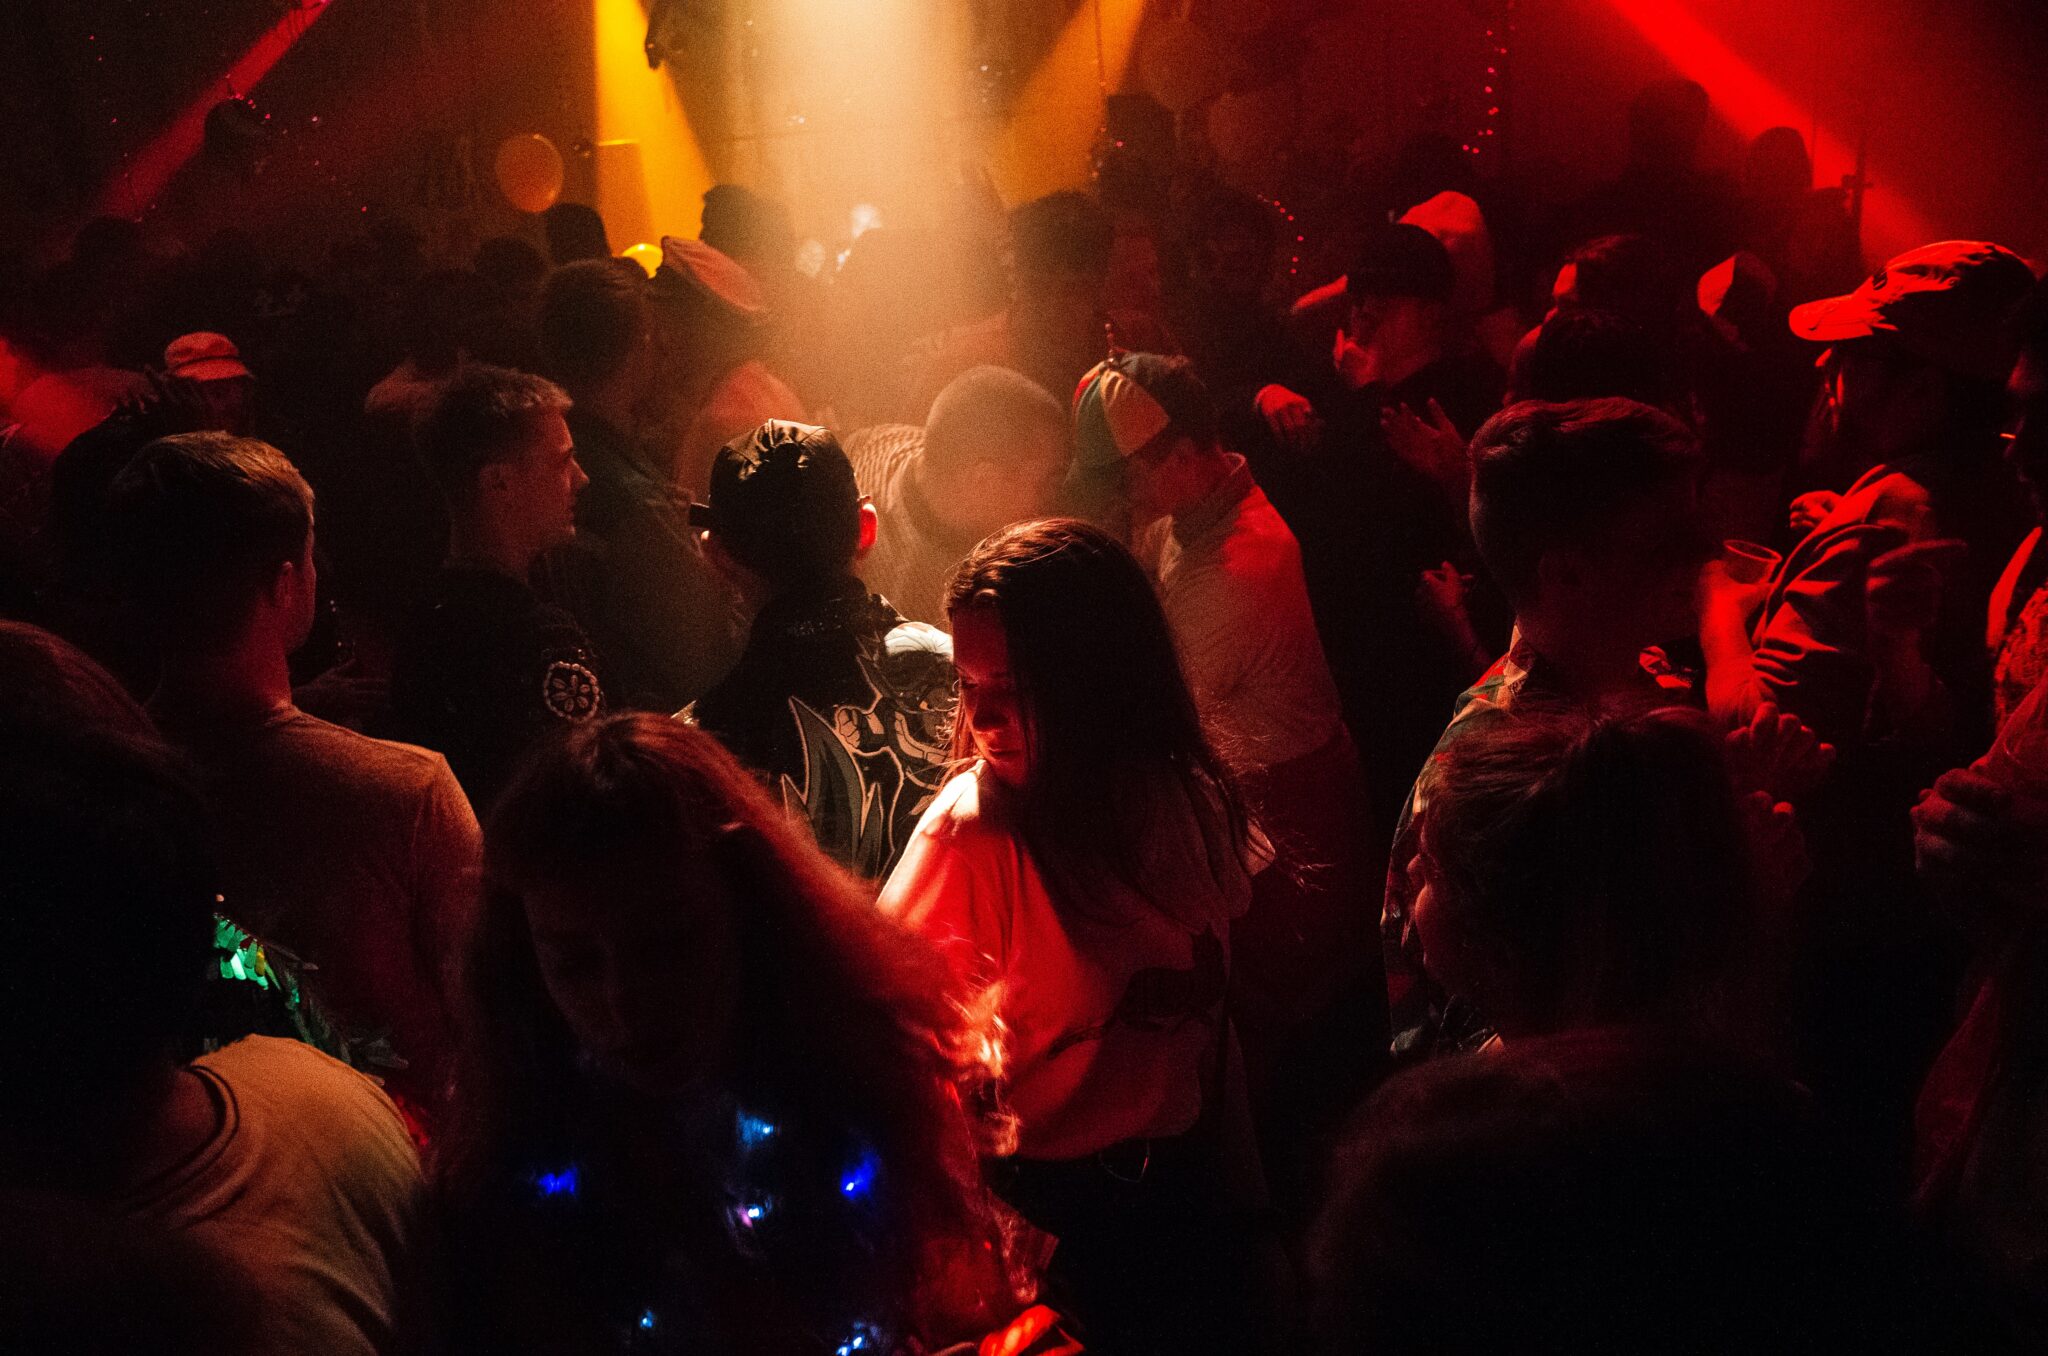 crowds-partying-inside-a-club